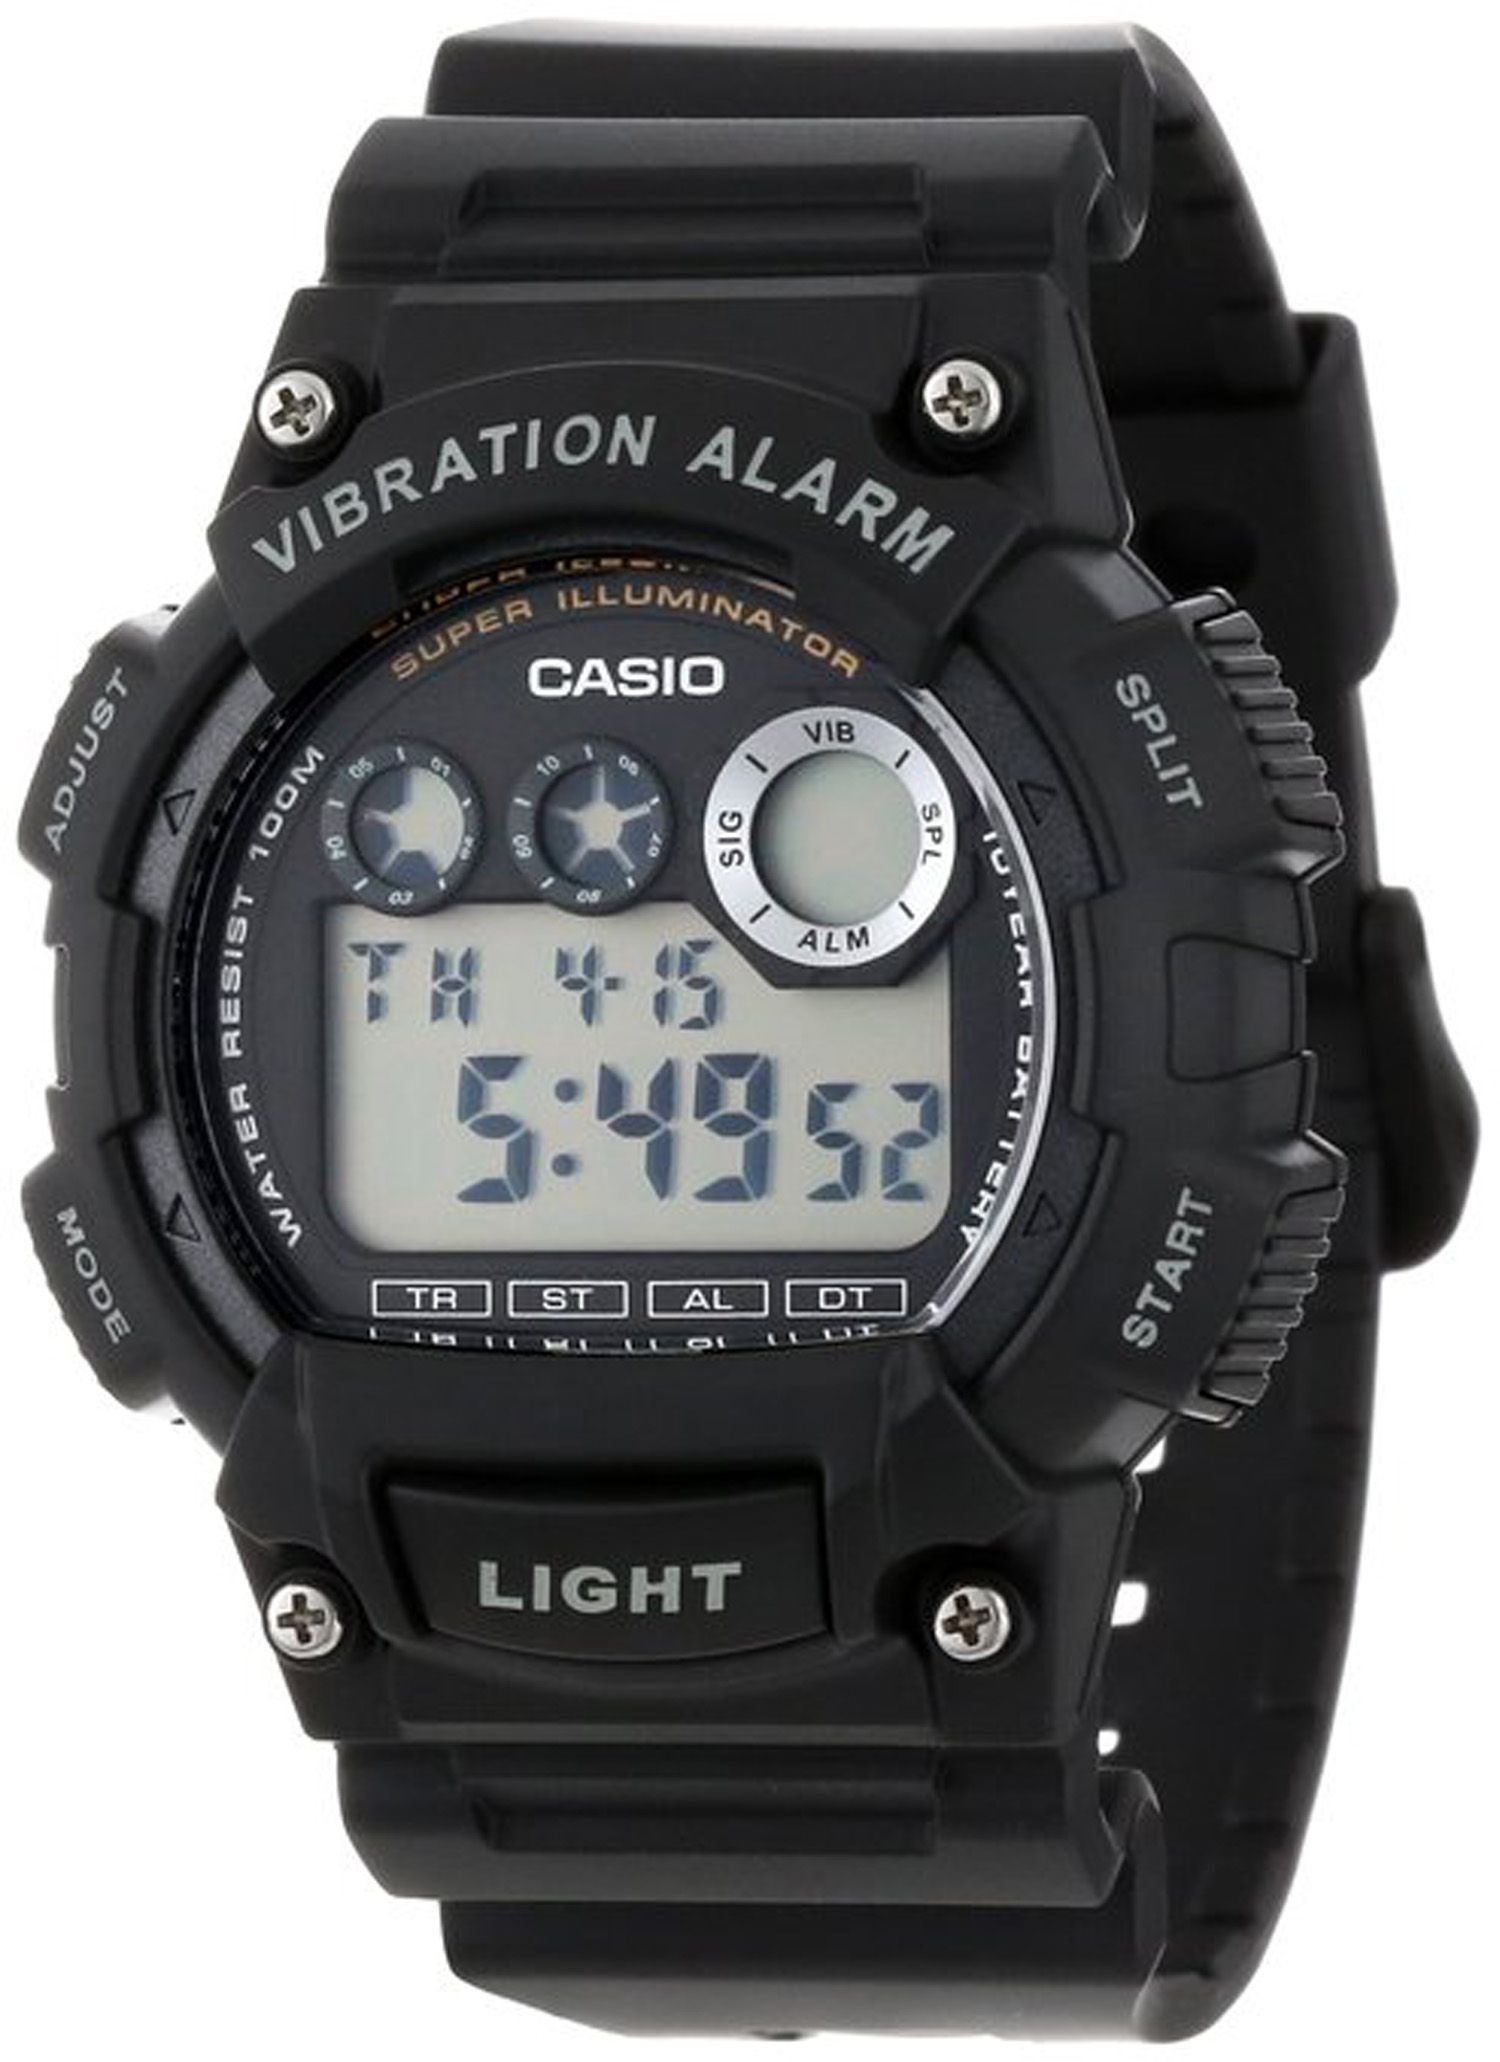 Casio Men's W735h-1avcf Super Illuminator Watch With Black Resin Band